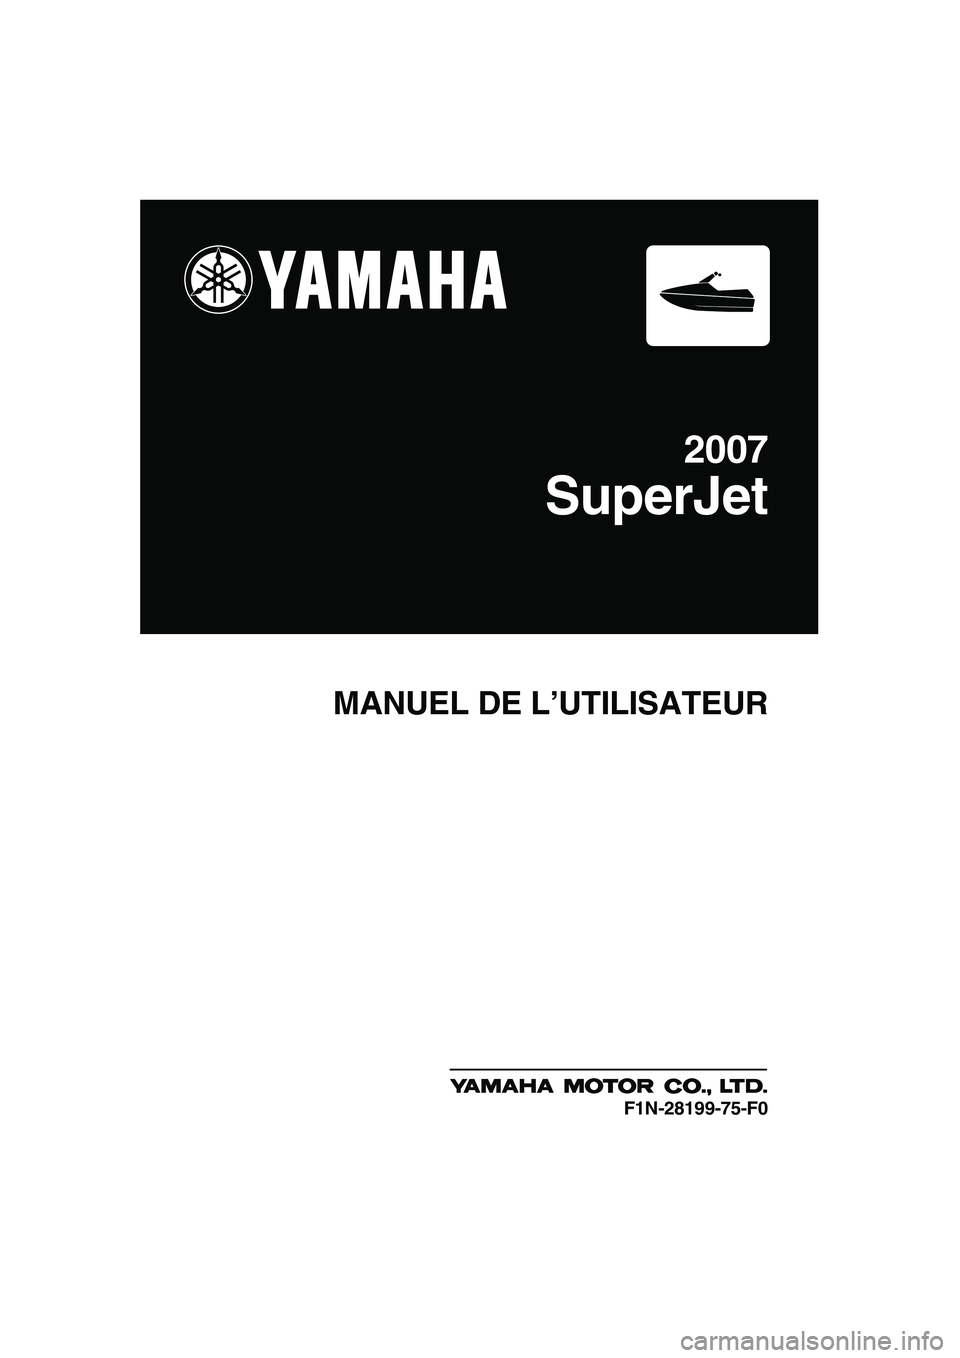 YAMAHA SUPERJET 2007  Notices Demploi (in French) MANUEL DE L’UTILISATEUR
2007
SuperJet
F1N-28199-75-F0
UF1N75F0.book  Page 1  Tuesday, May 16, 2006  9:19 AM 